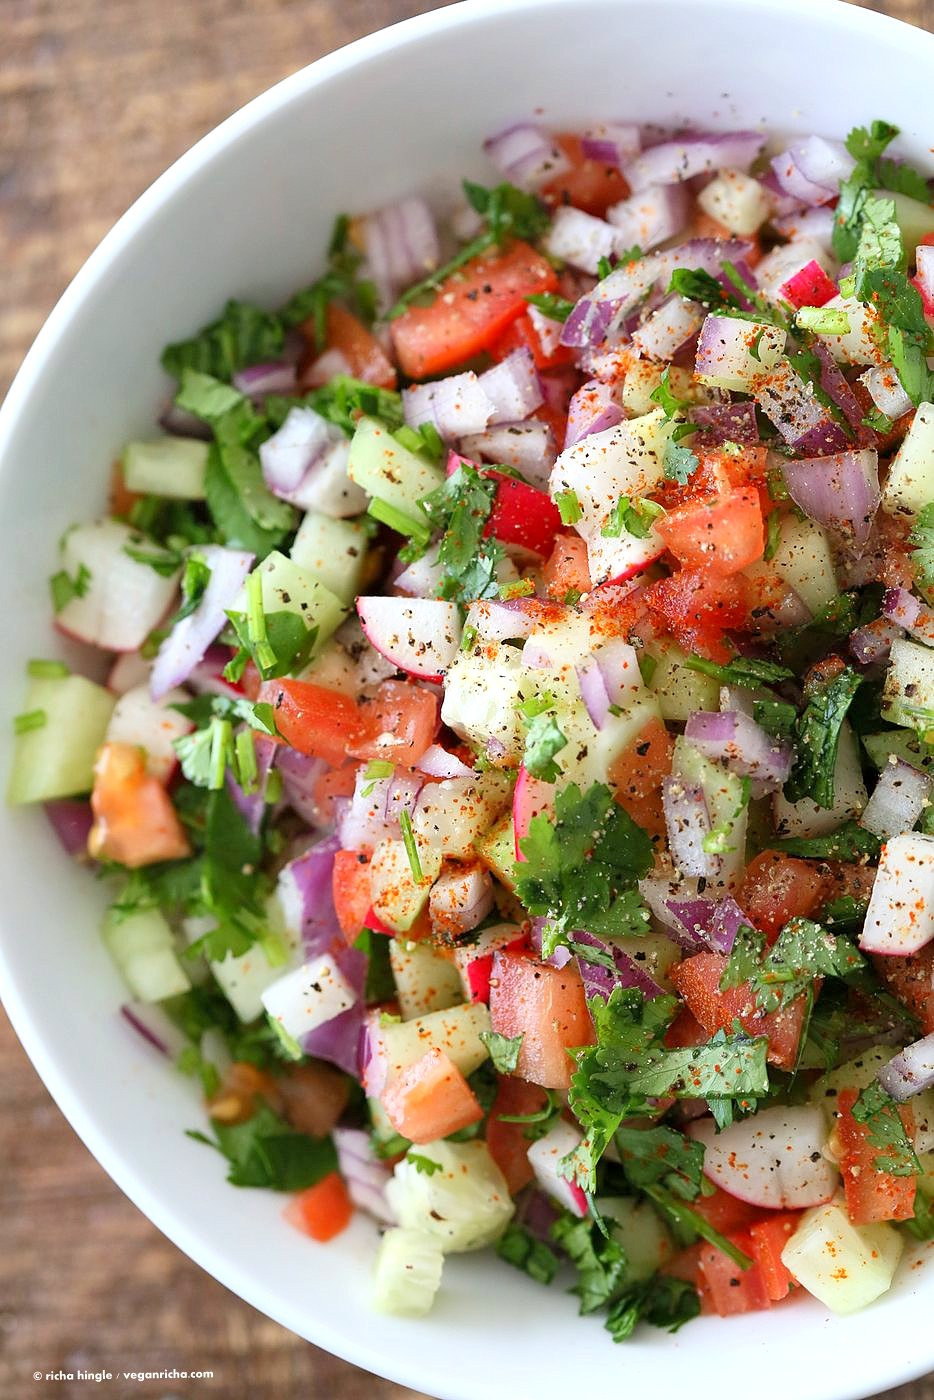 Cucumber Recipes Indian
 Kachumber Salad Cucumber Tomato ion Salad Recipe